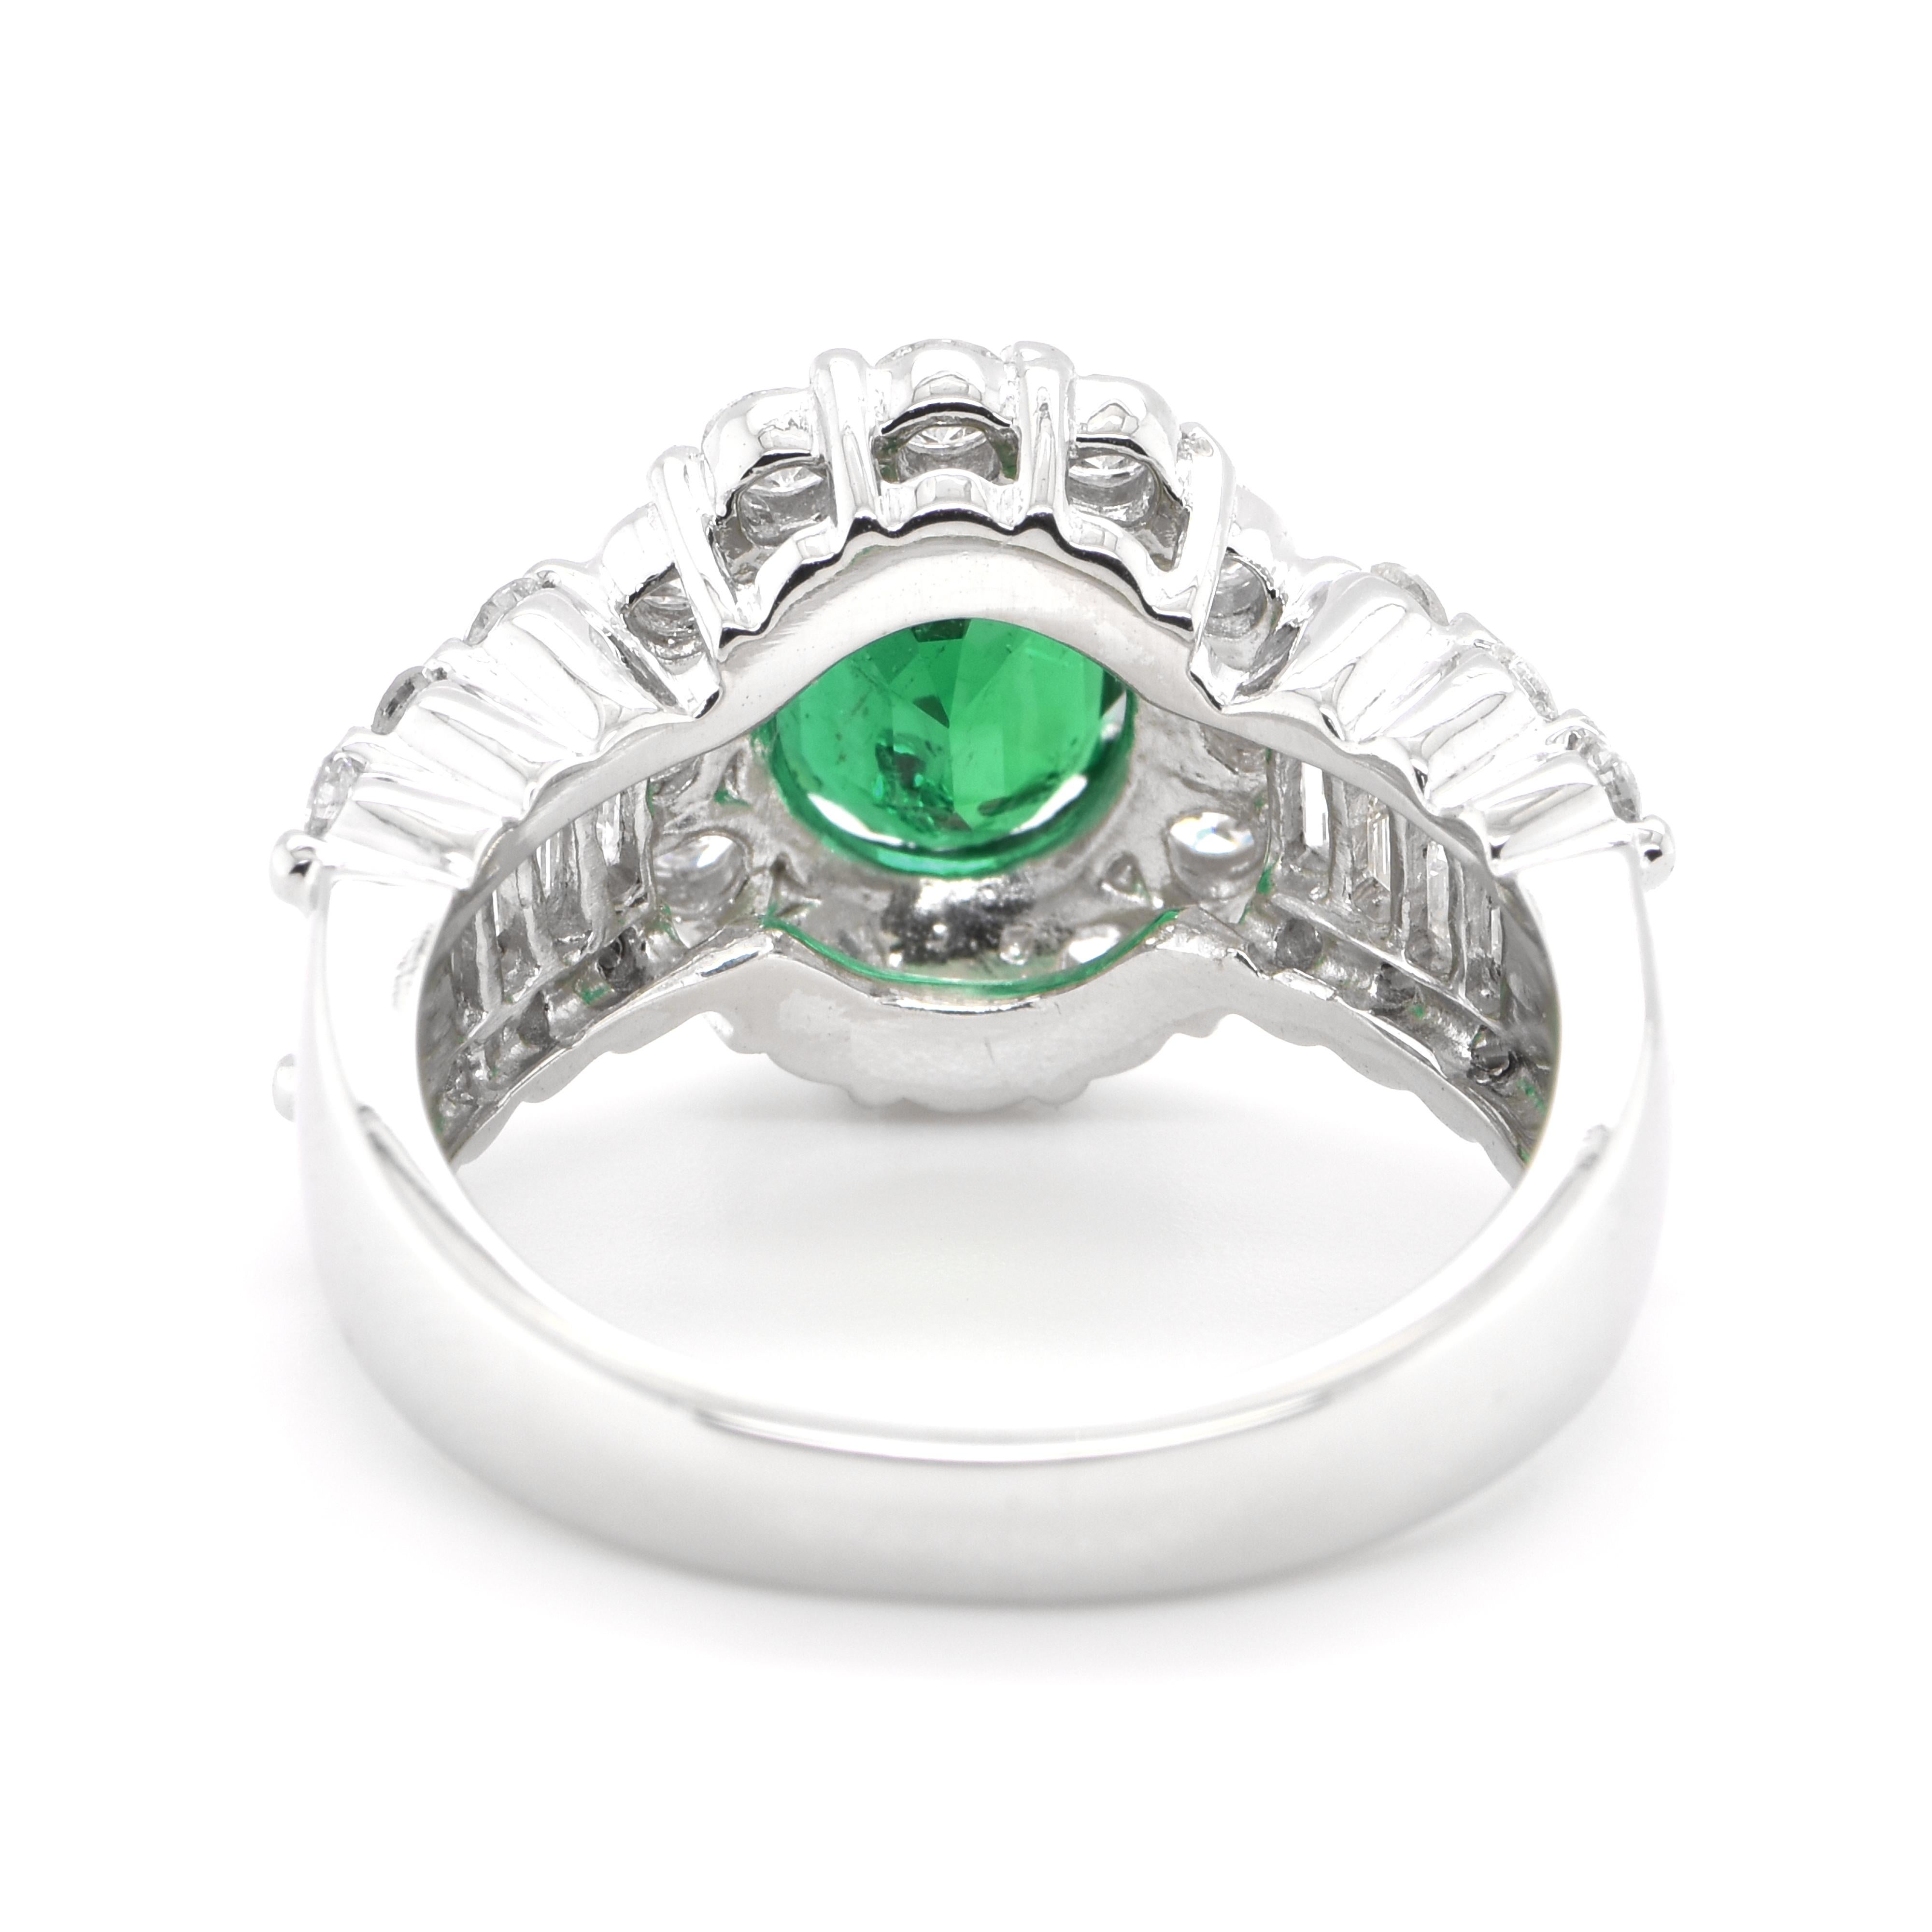 Women's 1.64 Carat Natural Emerald and Diamond Halo Ring Set in Platinum